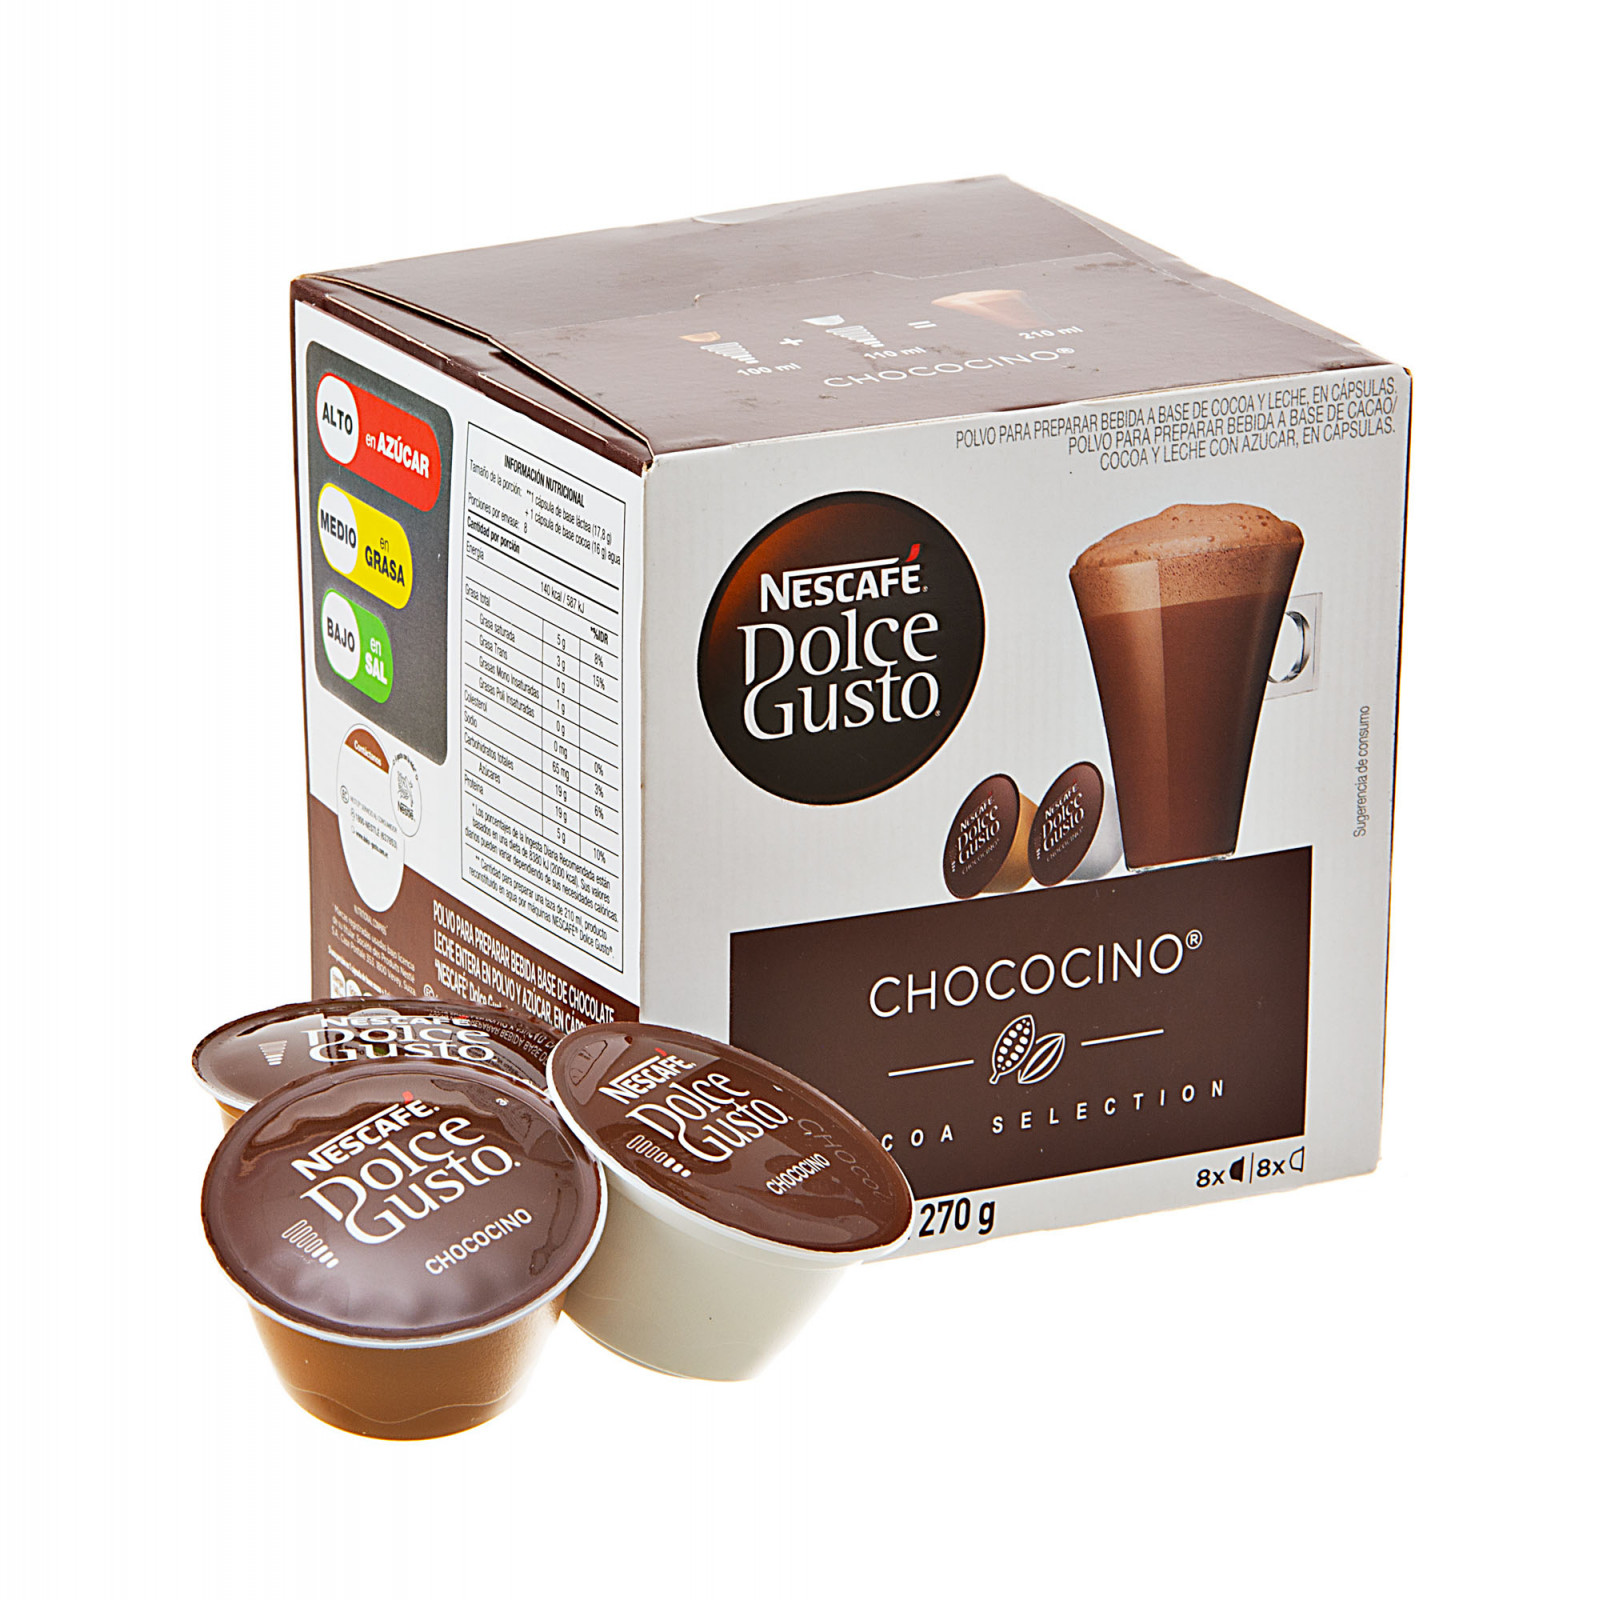 Nestle- Nescafe Dolce Gusto, Chococino Flavor- 16pcs